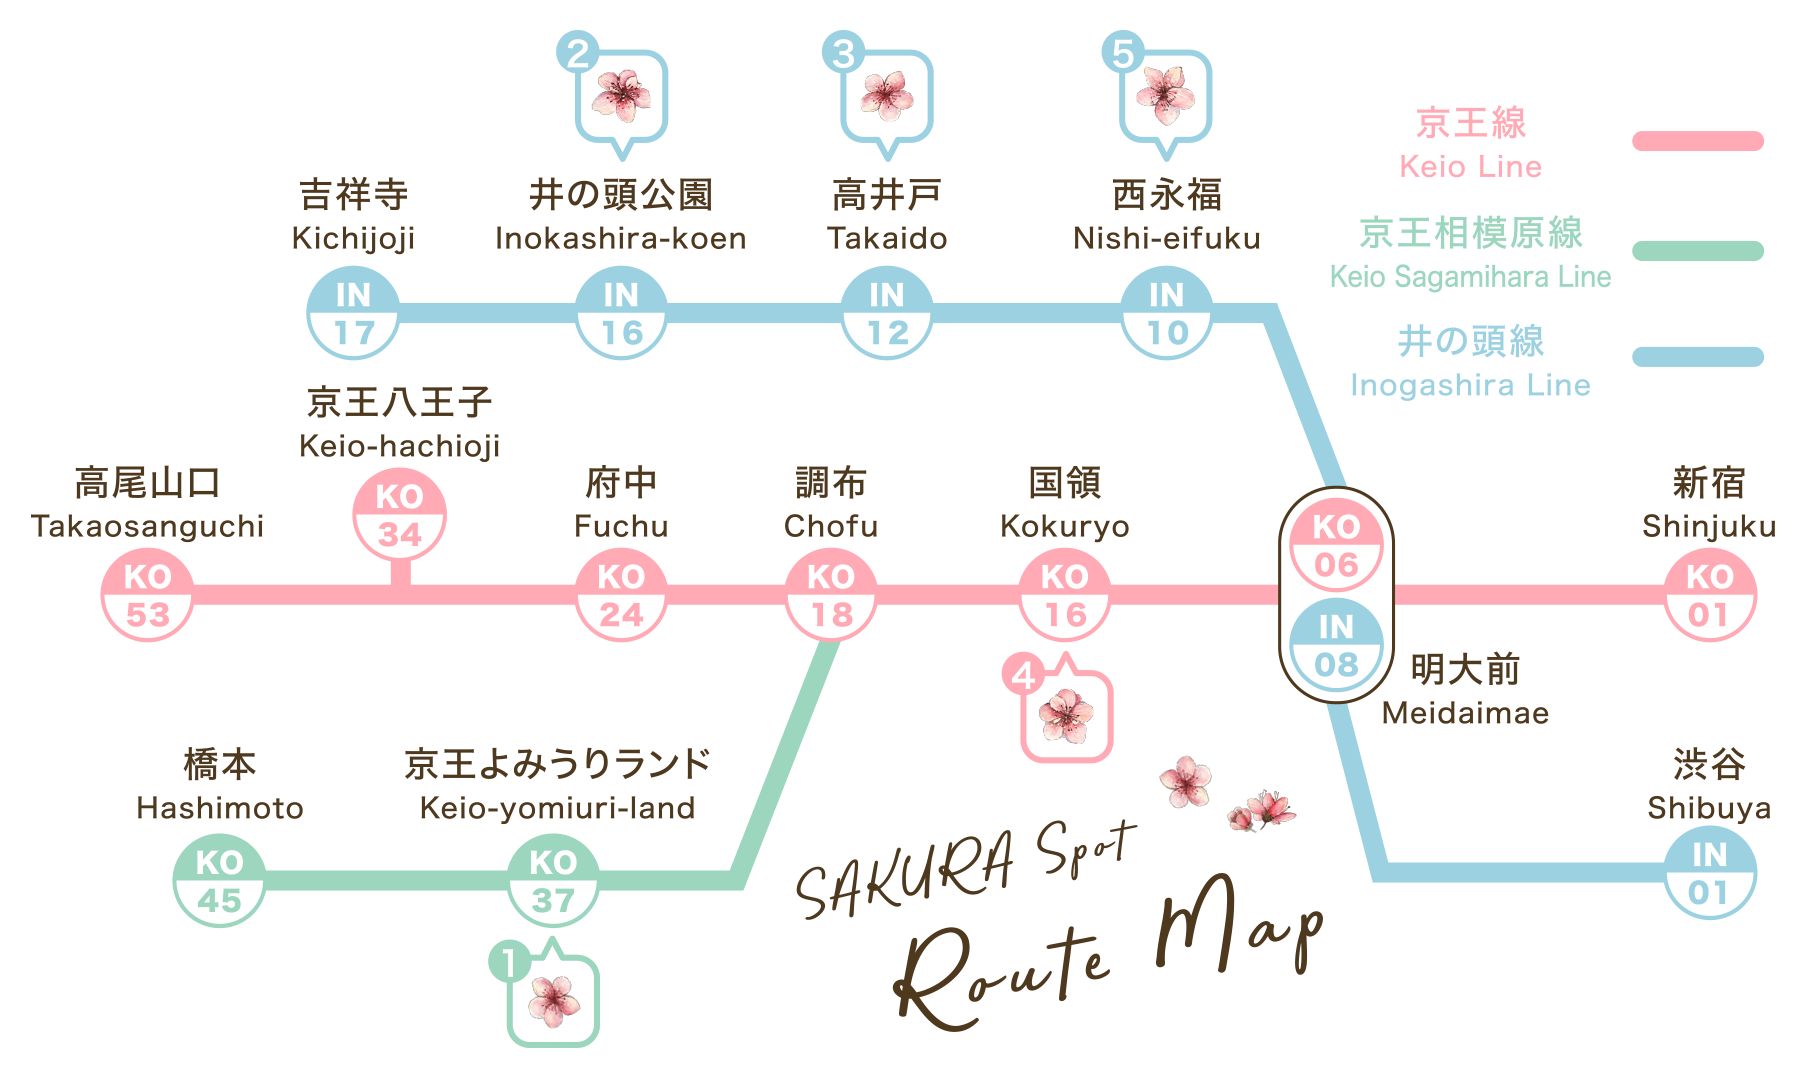 SAKURA Spot Route Map